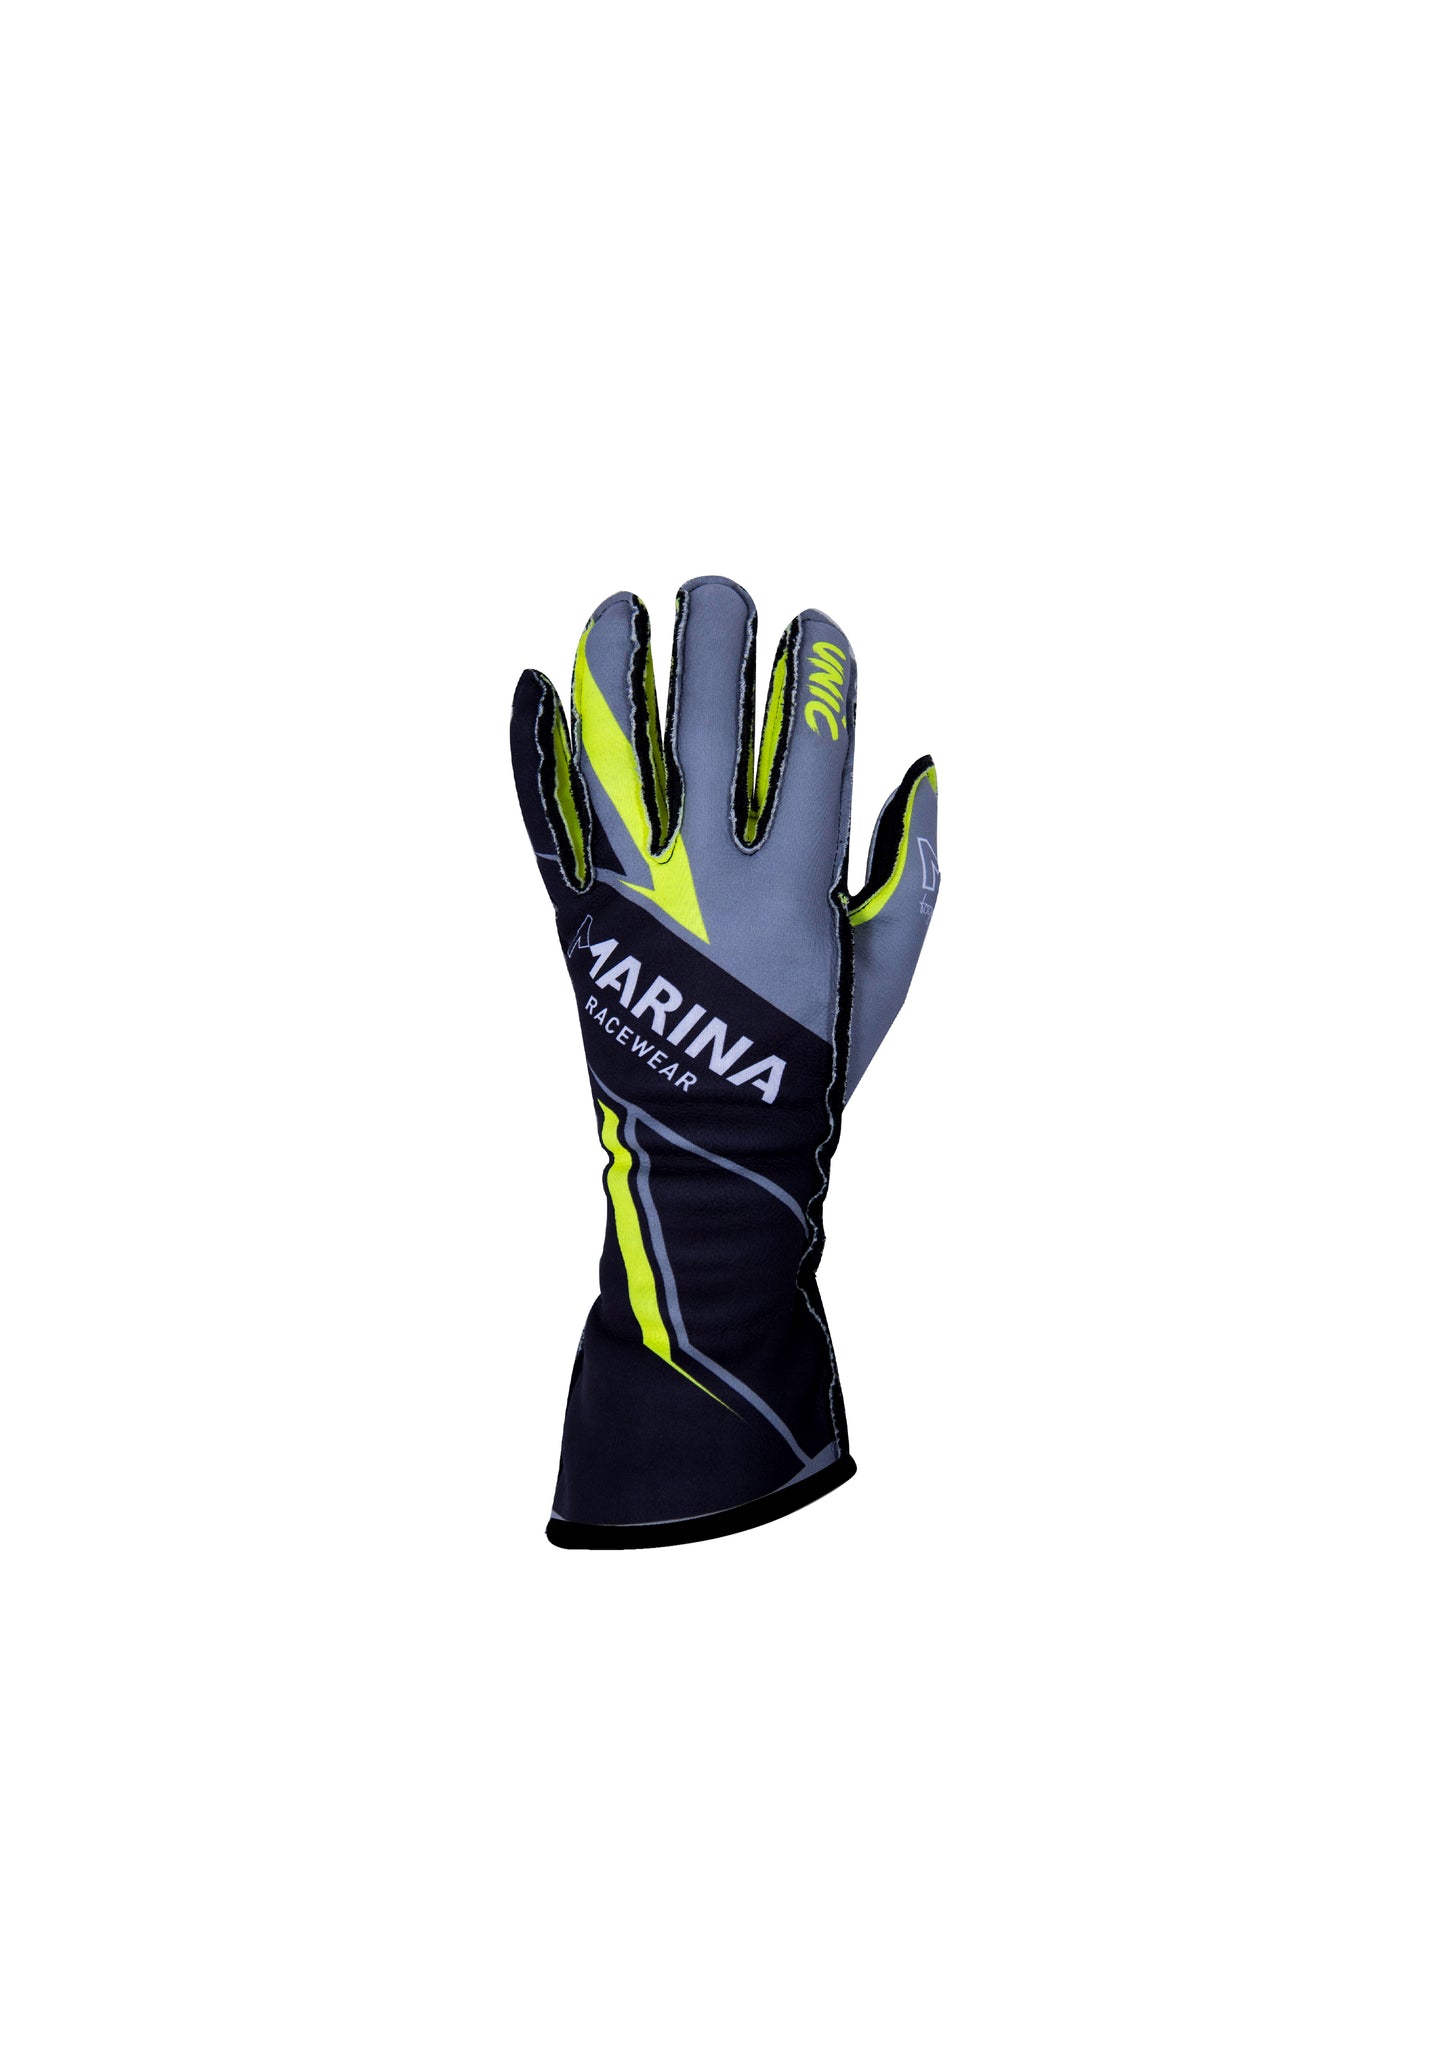 Gloves FIA MARINA UNIC TEAM GLOVES ARROWS - BLACK YELLOW GREY